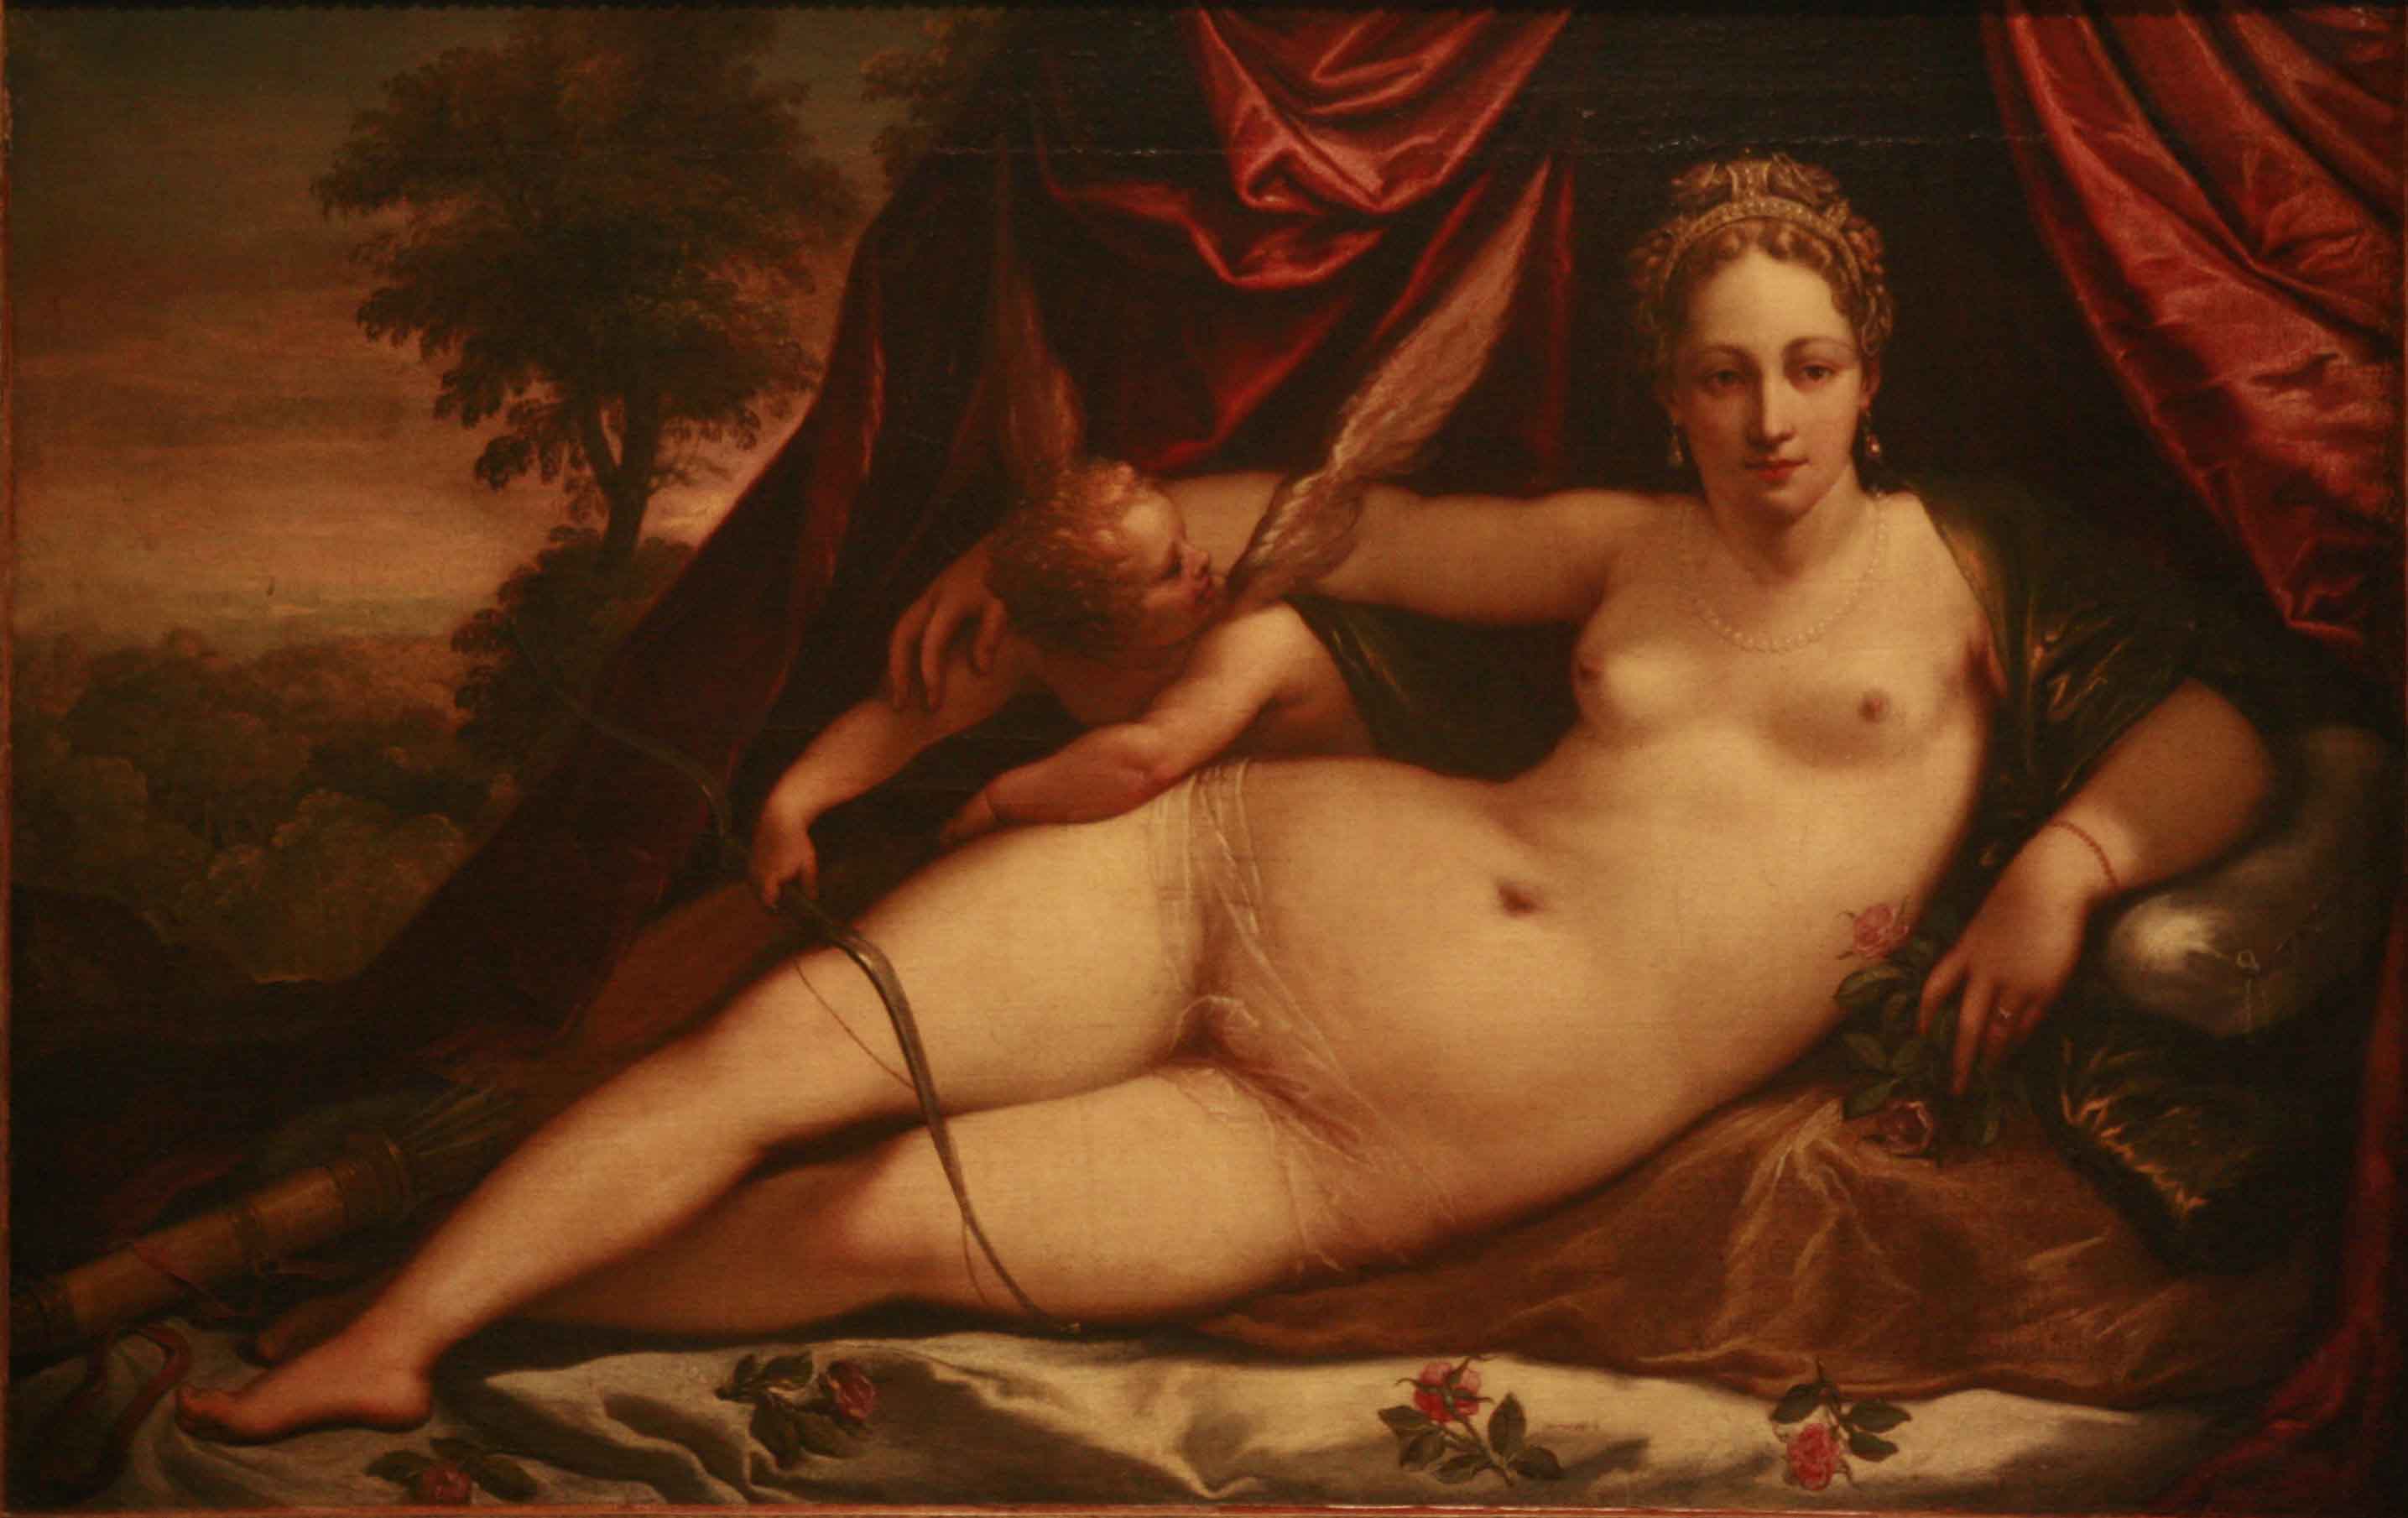 BRAMANTE Venus and Cupid